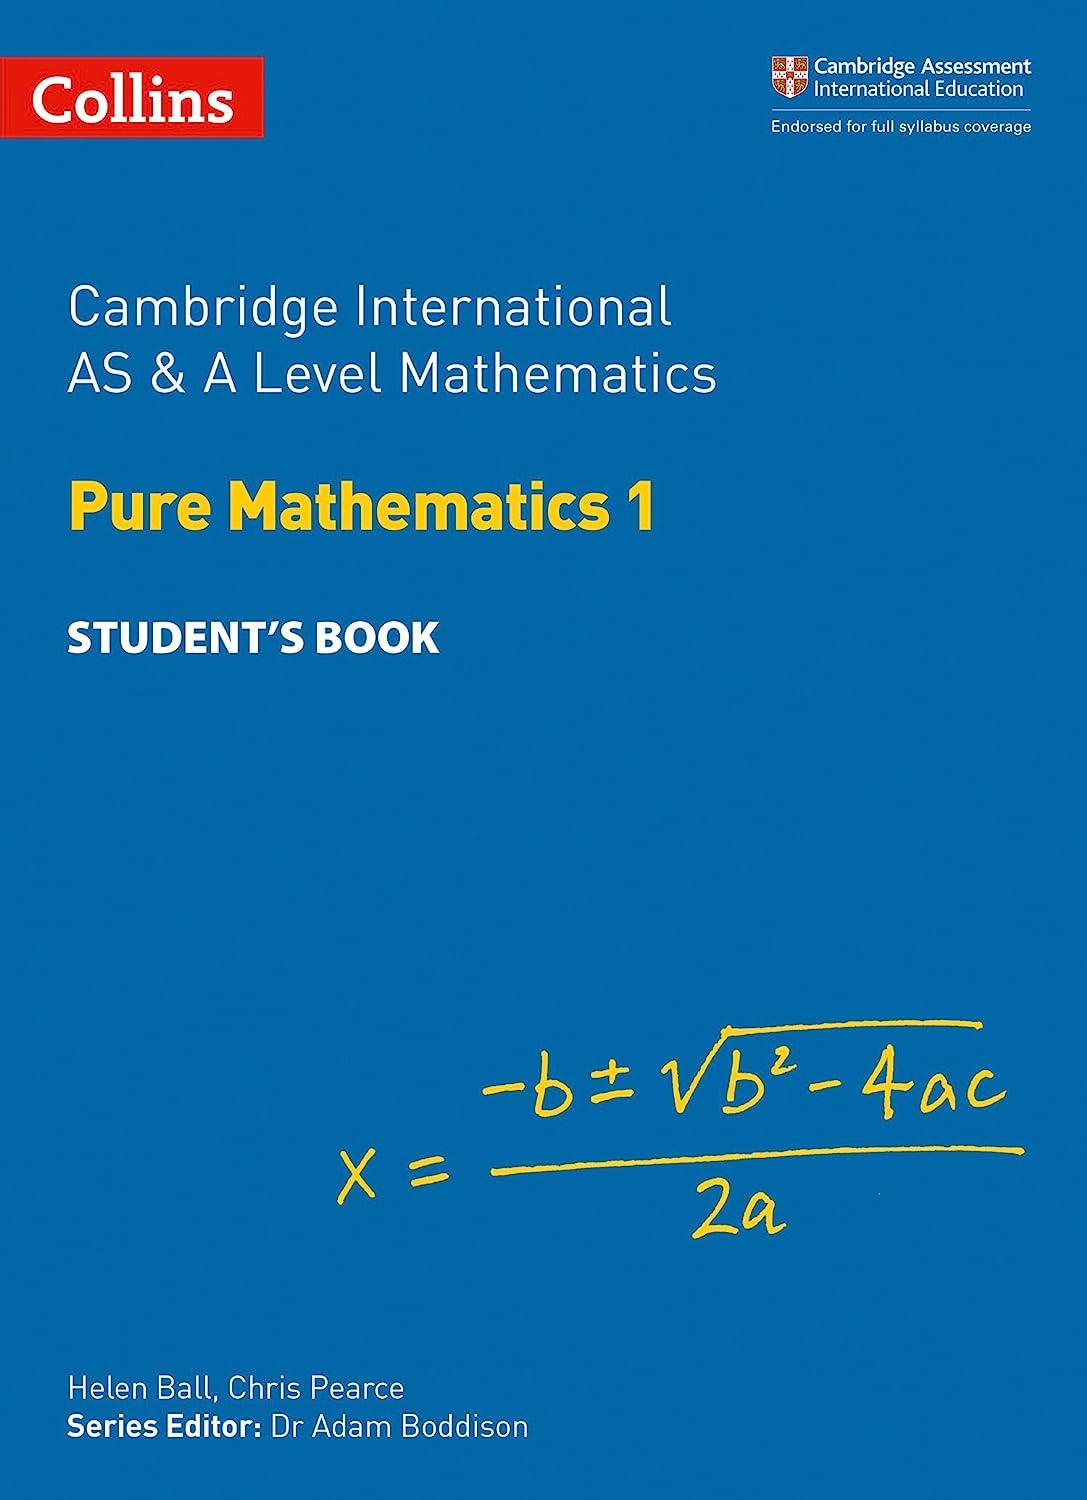 cambridge international as and a level mathematics pure mathematics 1 student book 1st edition helen ball,